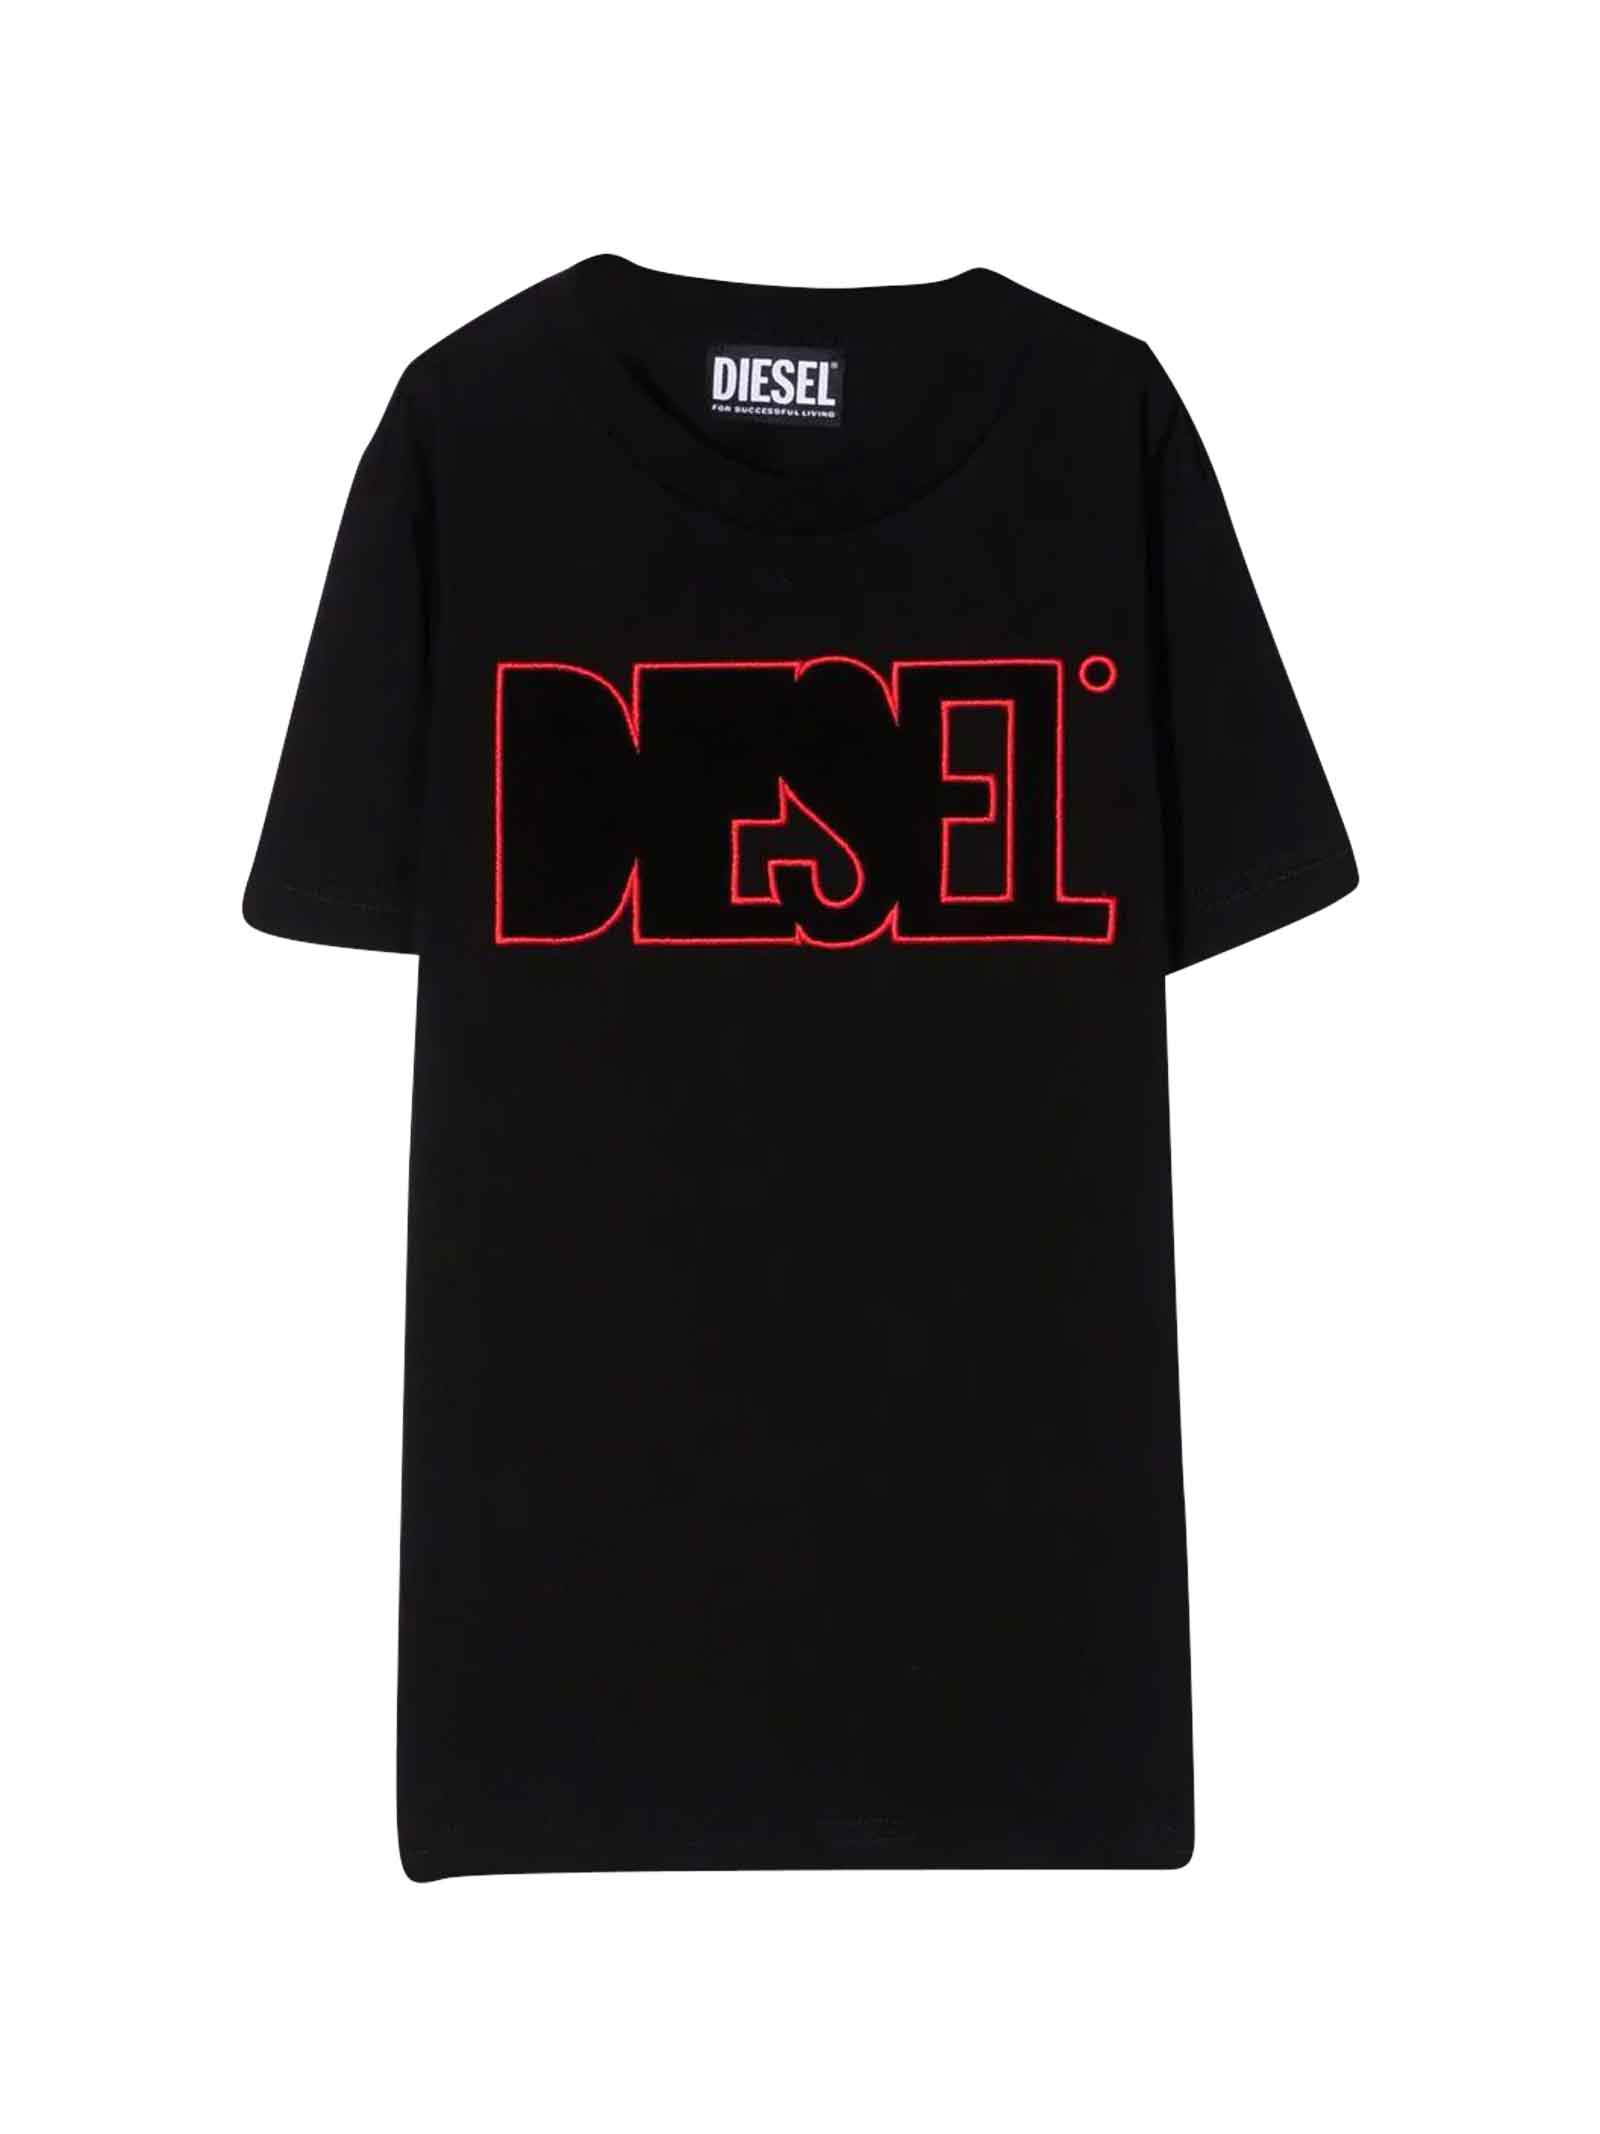 Diesel Black Teen T-shirt With Red Print